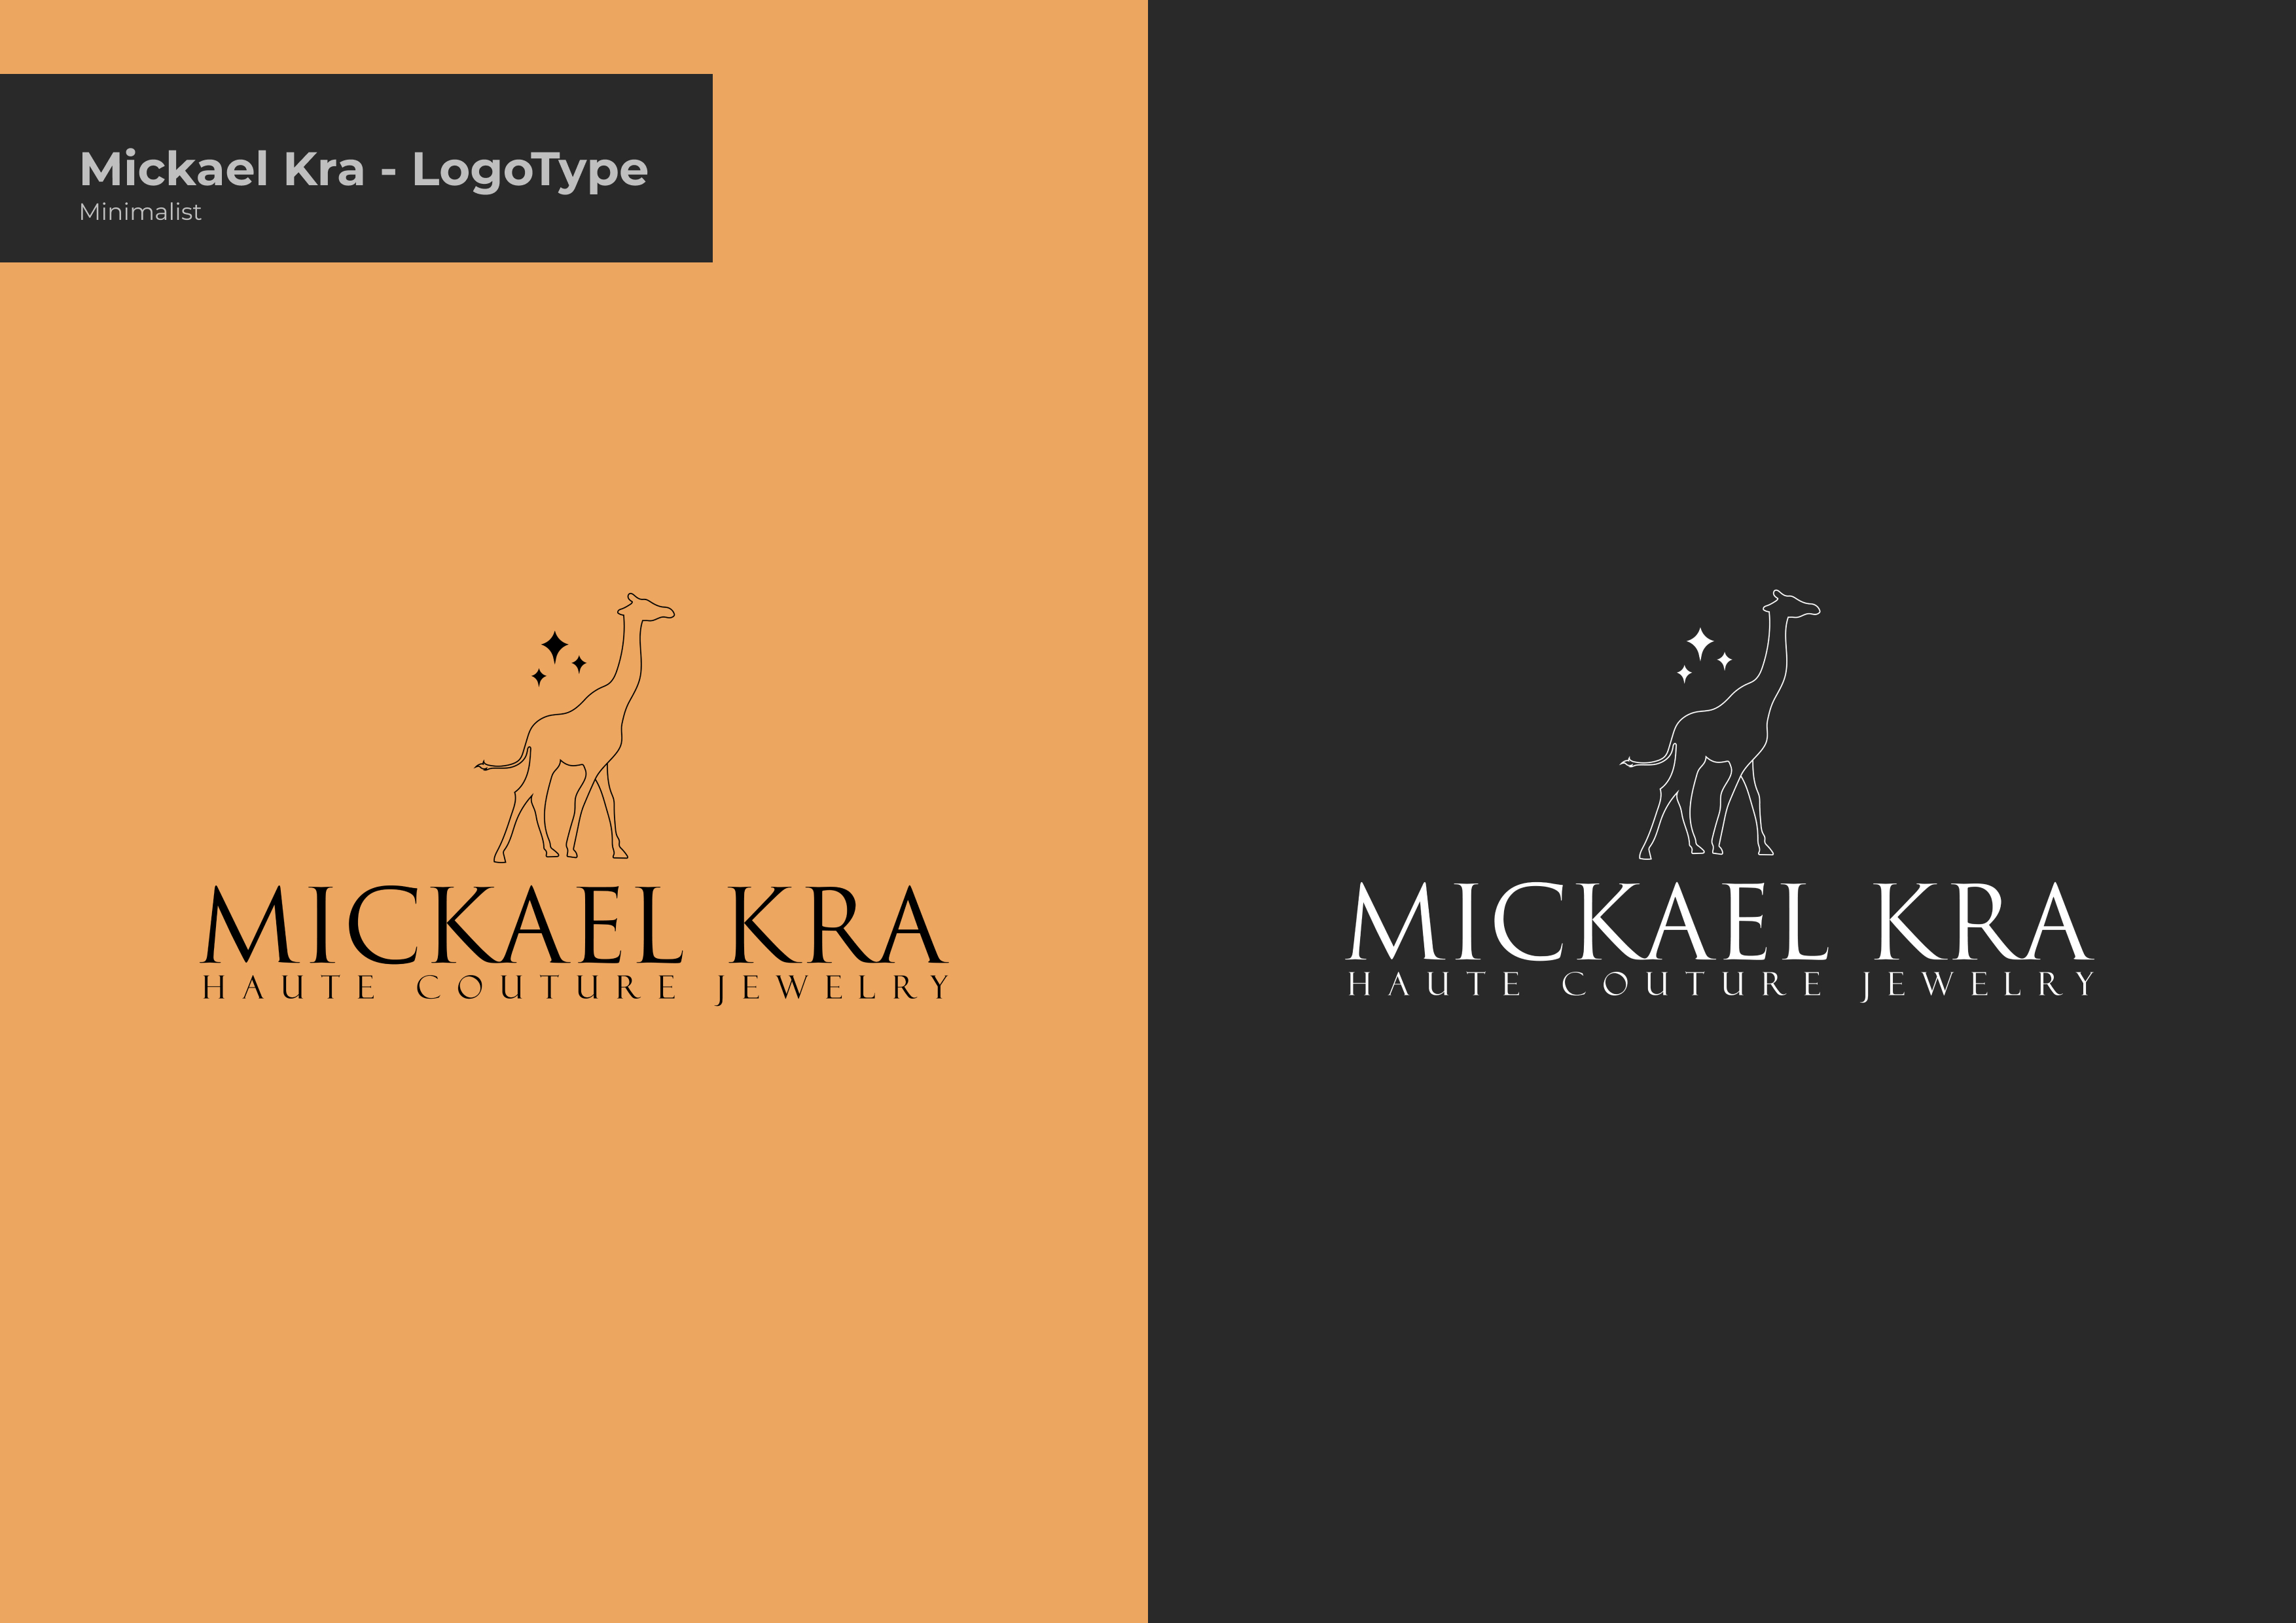 Logotype minimalist